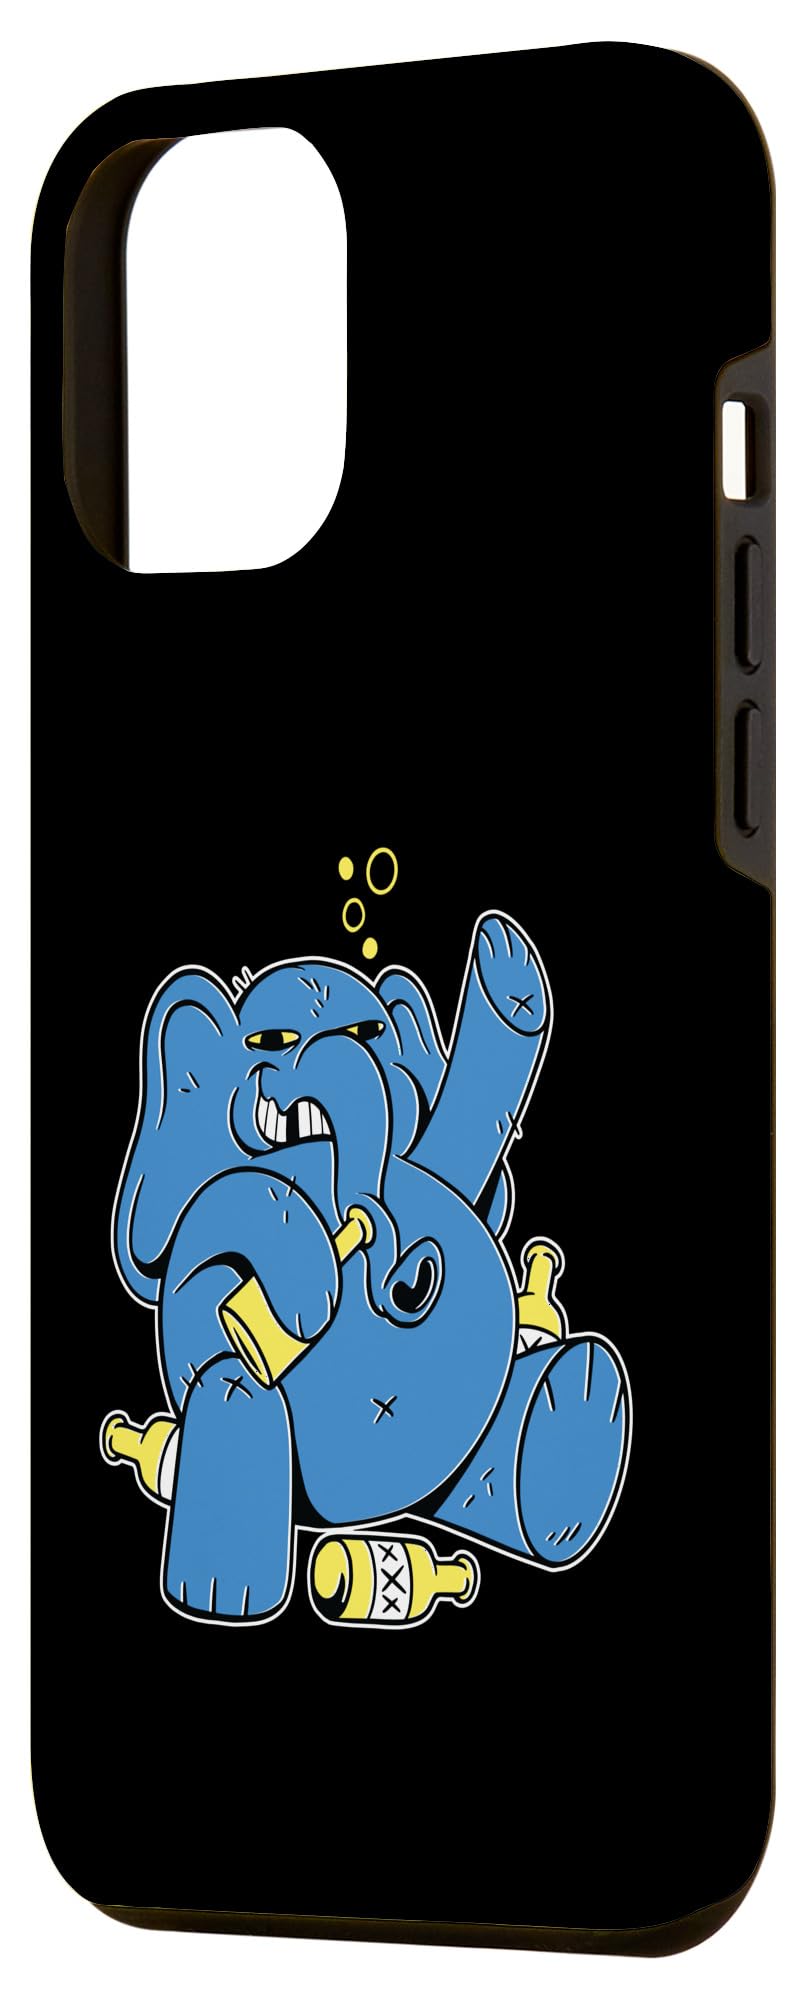 iPhone 12 Pro Max Drunk Elephant Case